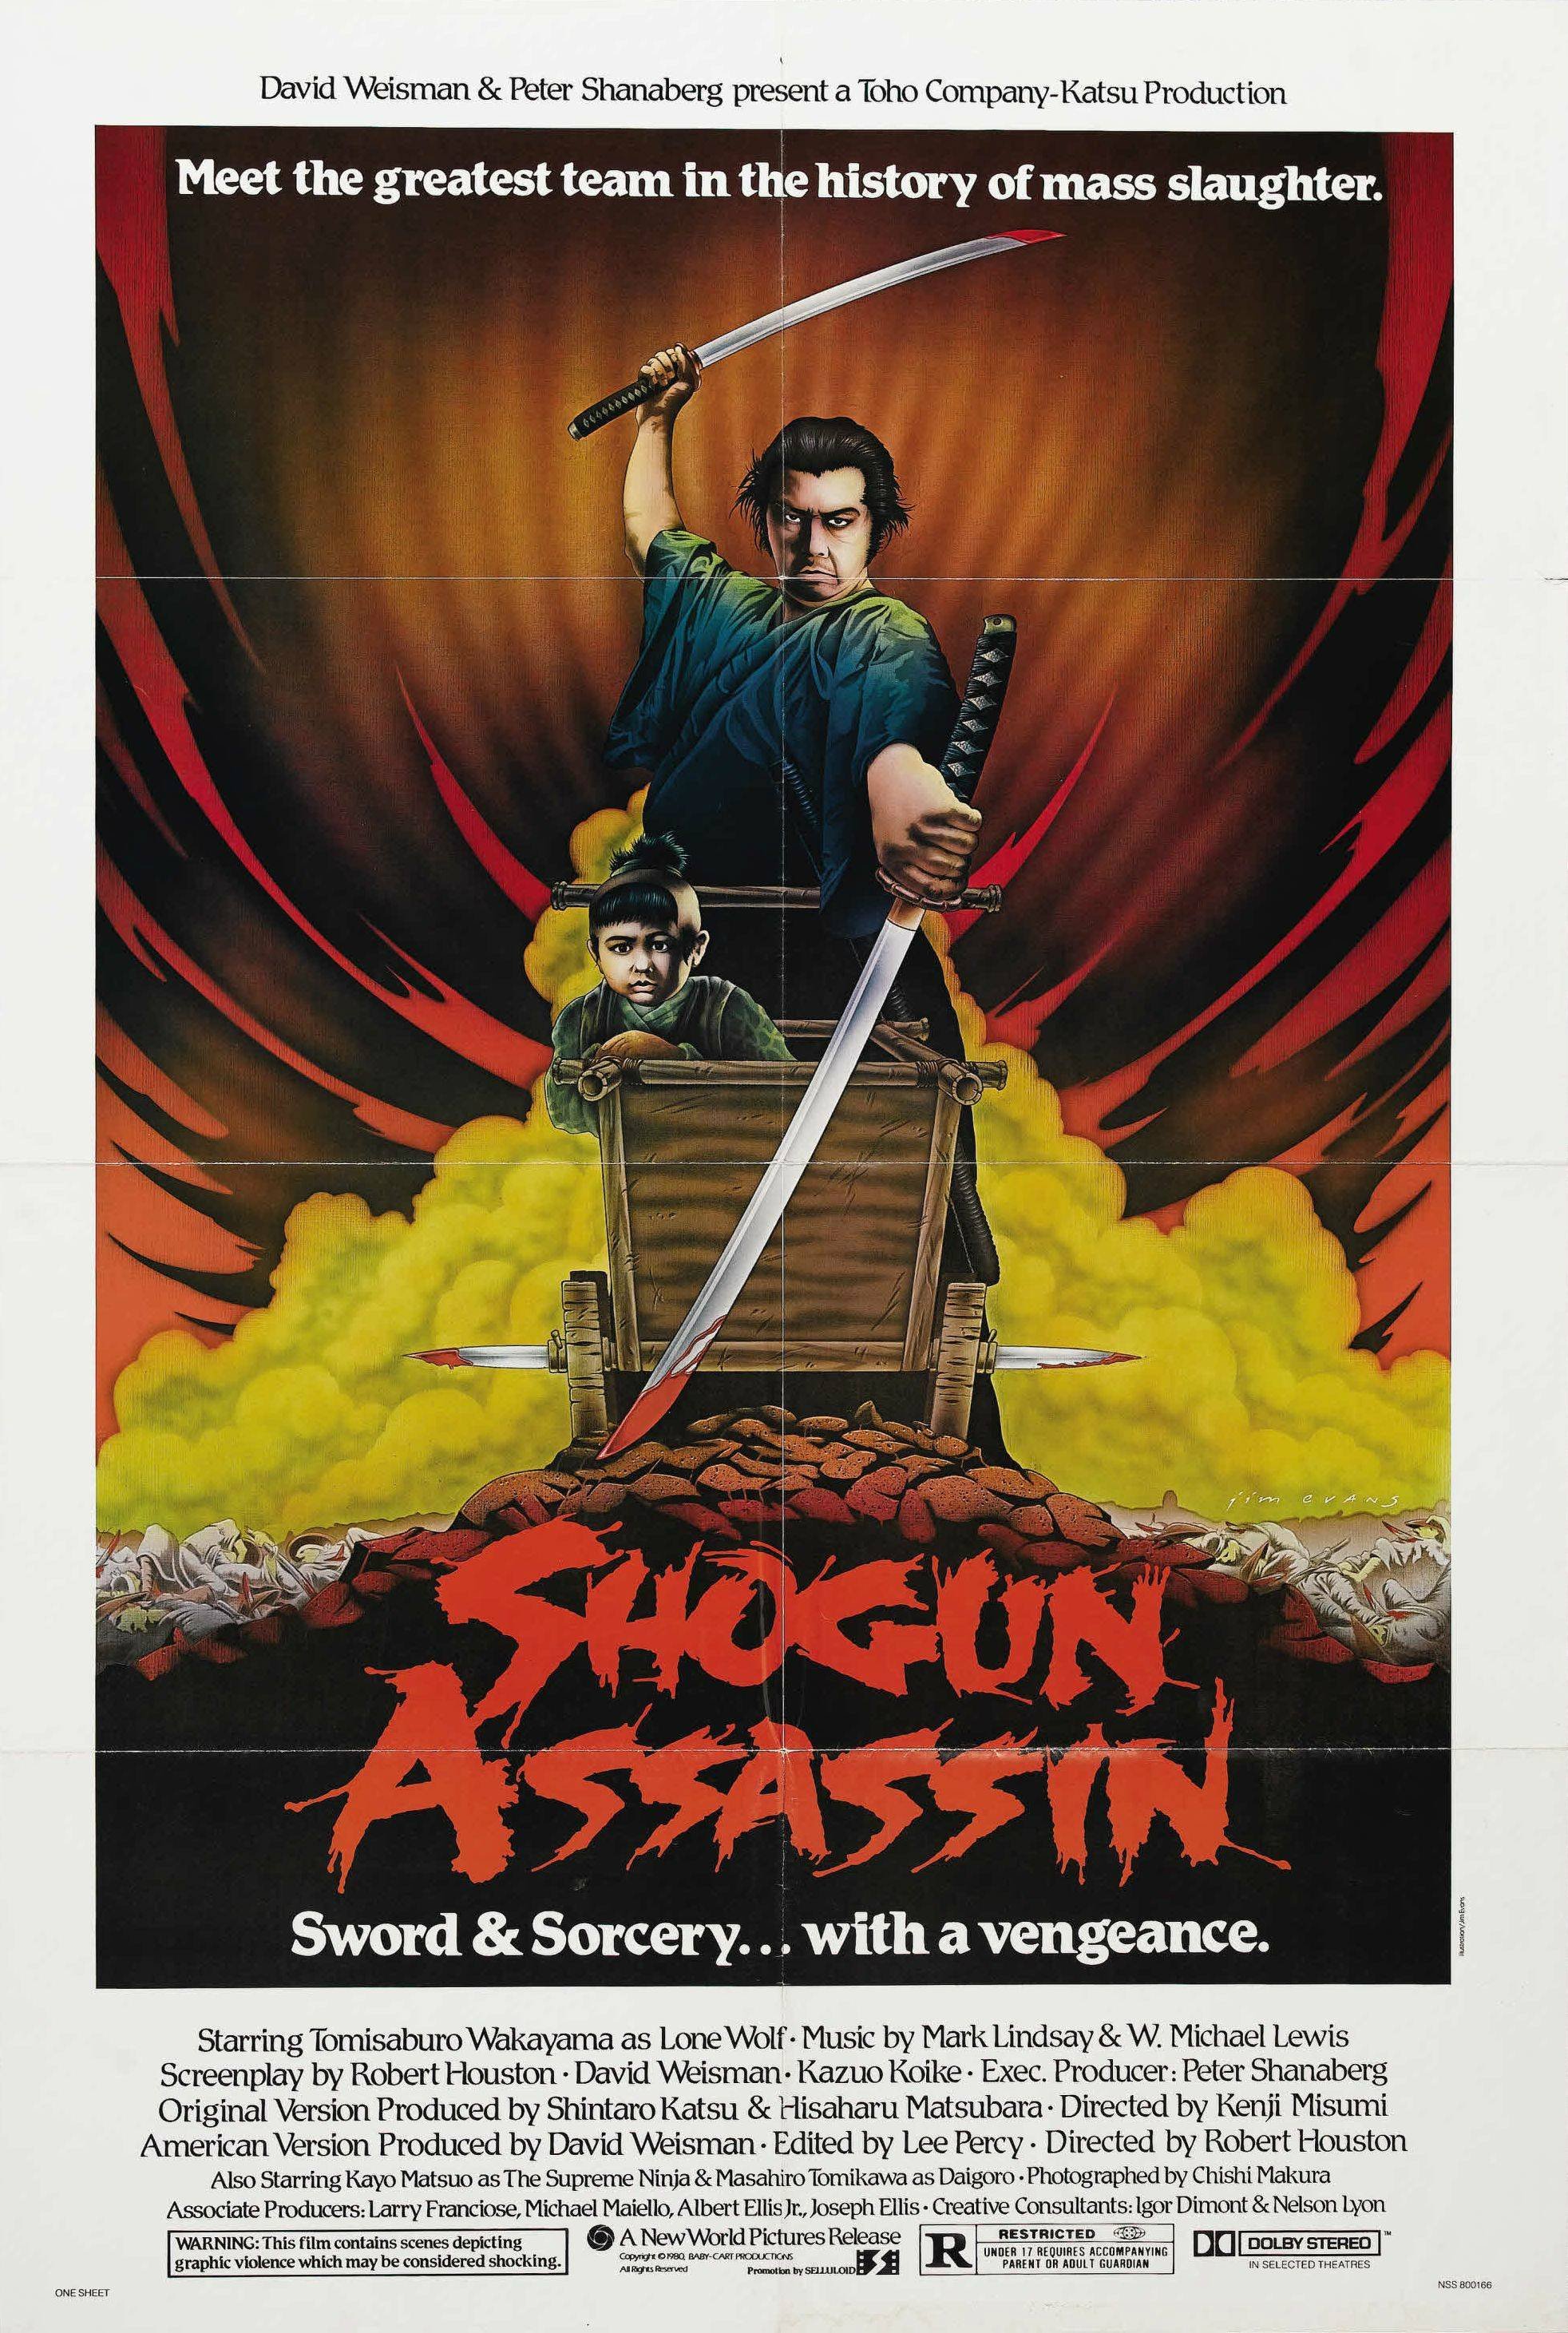 Poster of the movie Shogun Assassin